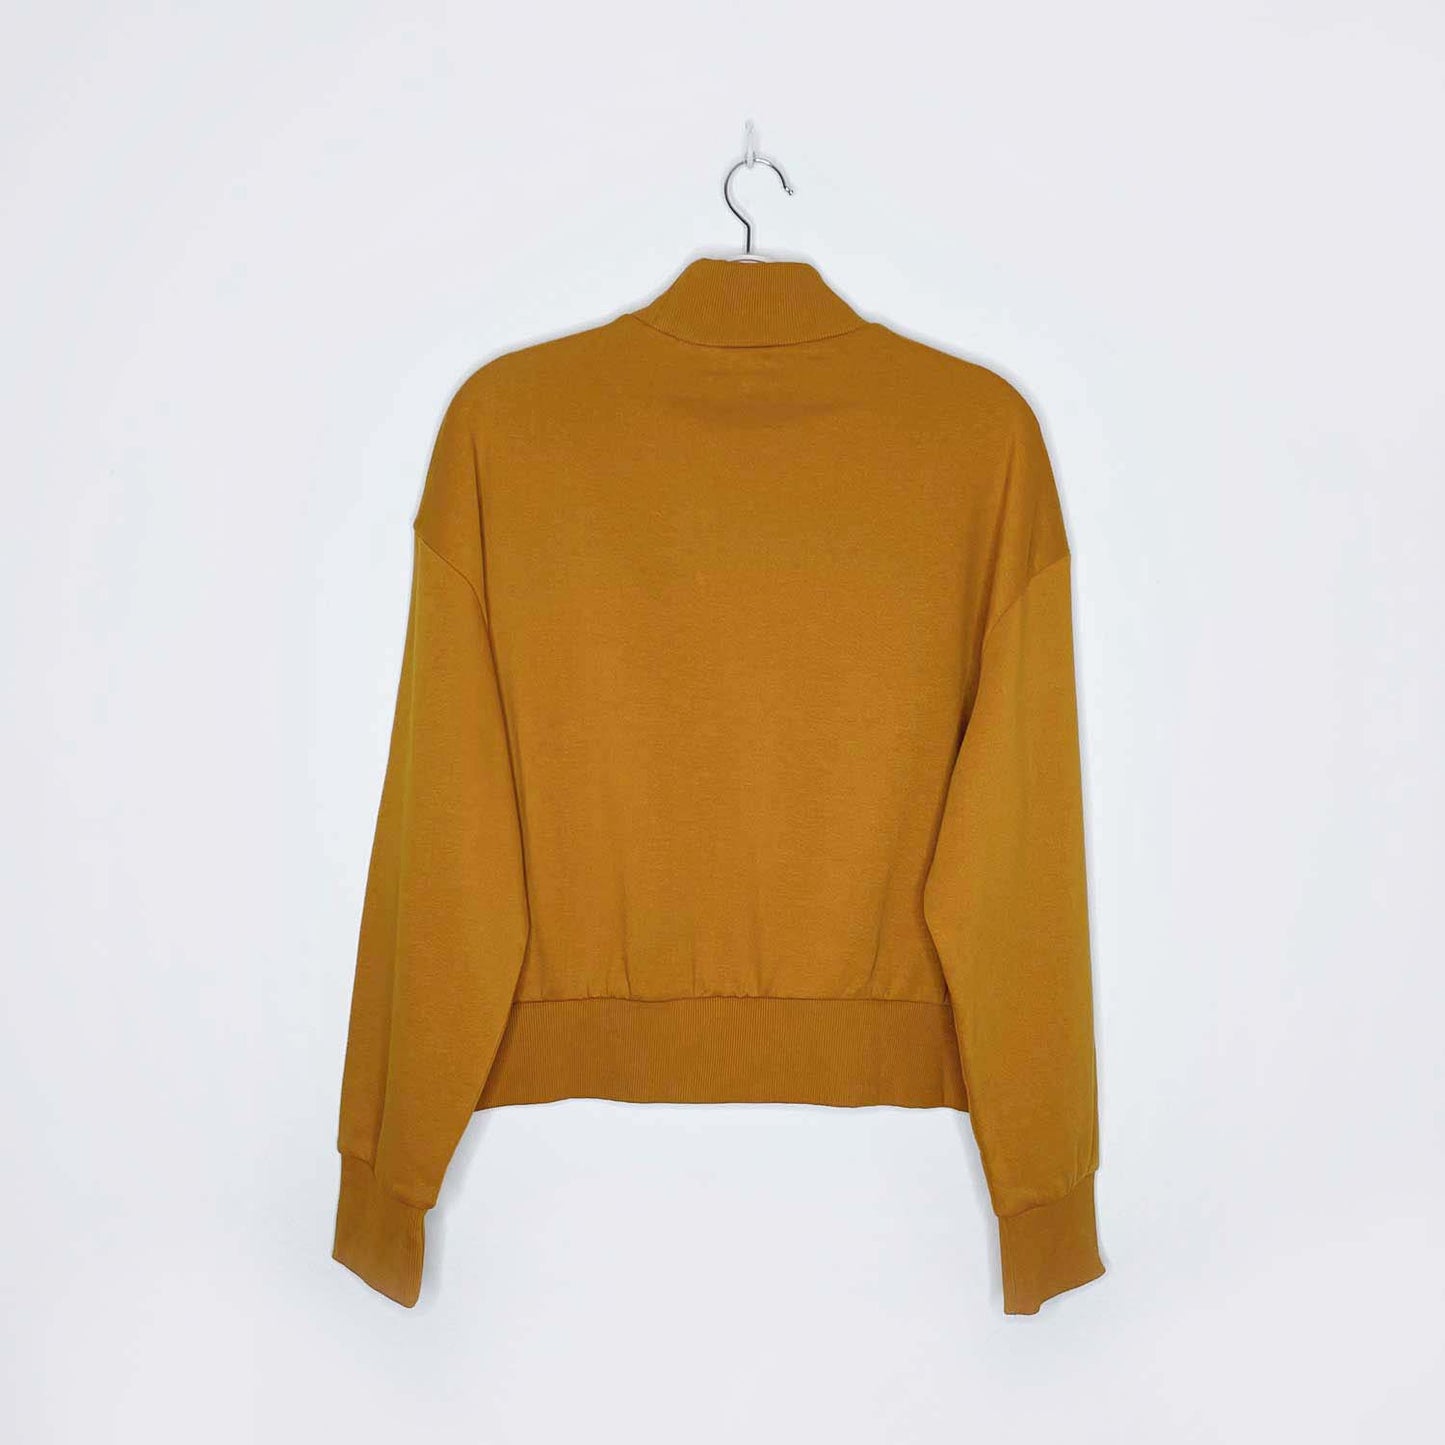 h&m l'hiver flocked mock neck sweatshirt - size medium